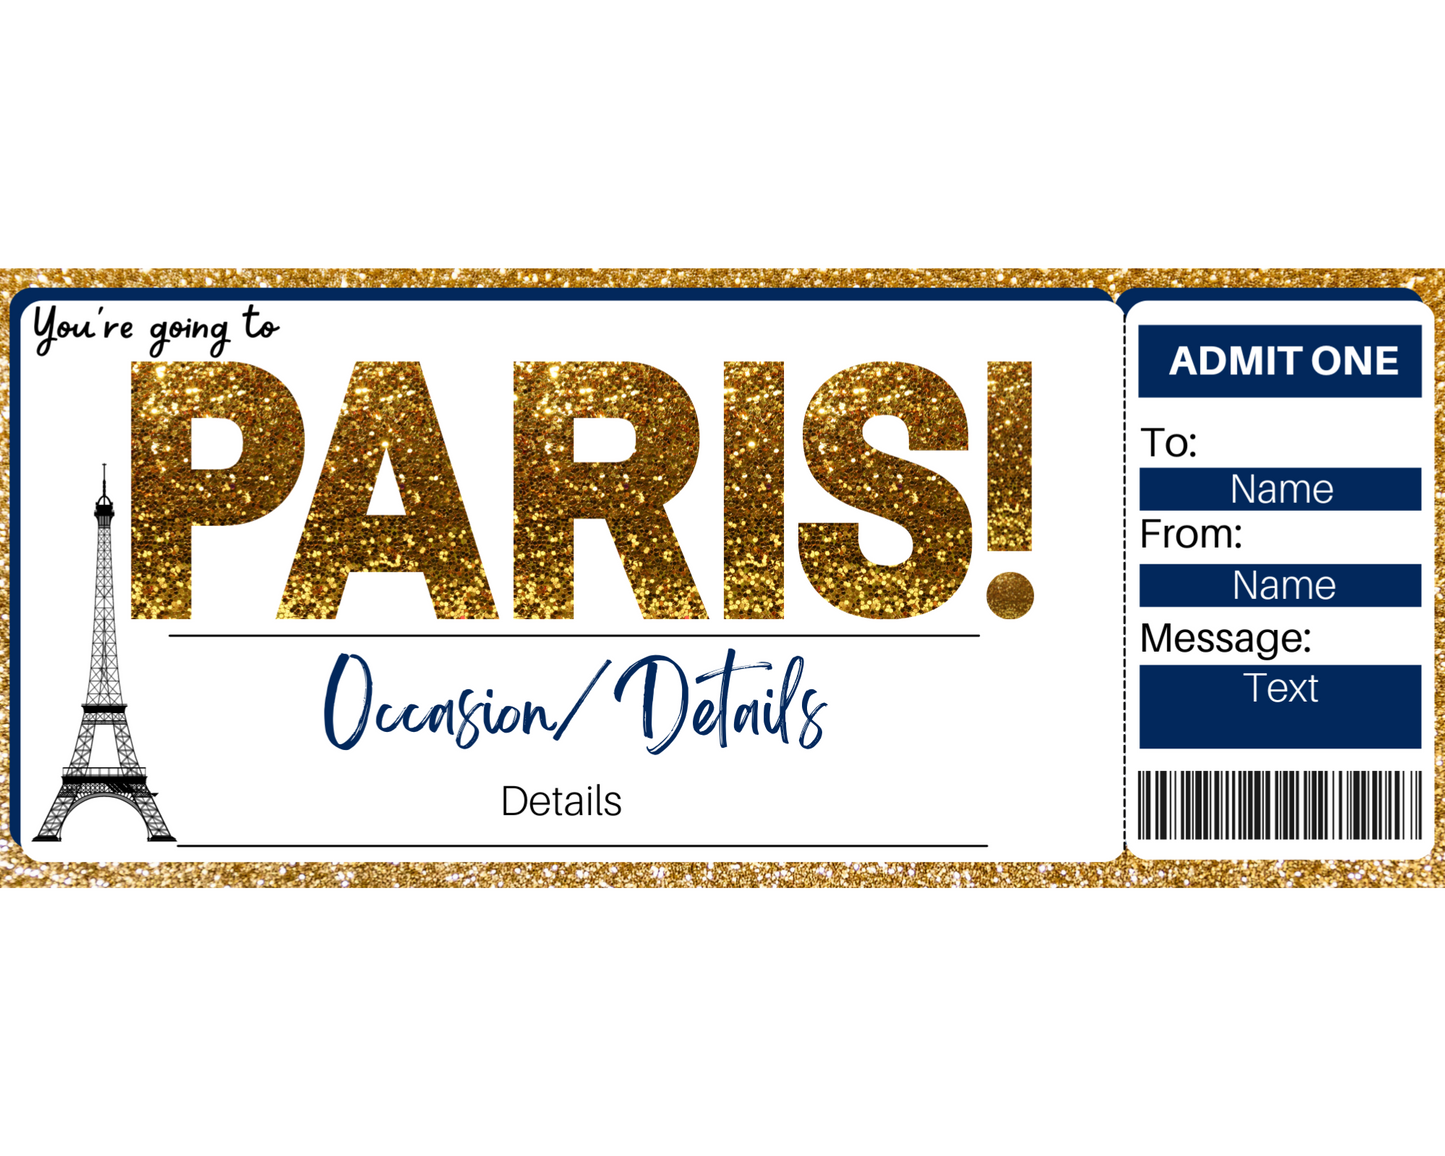 Paris Gift Certificate: Boarding Pass Template